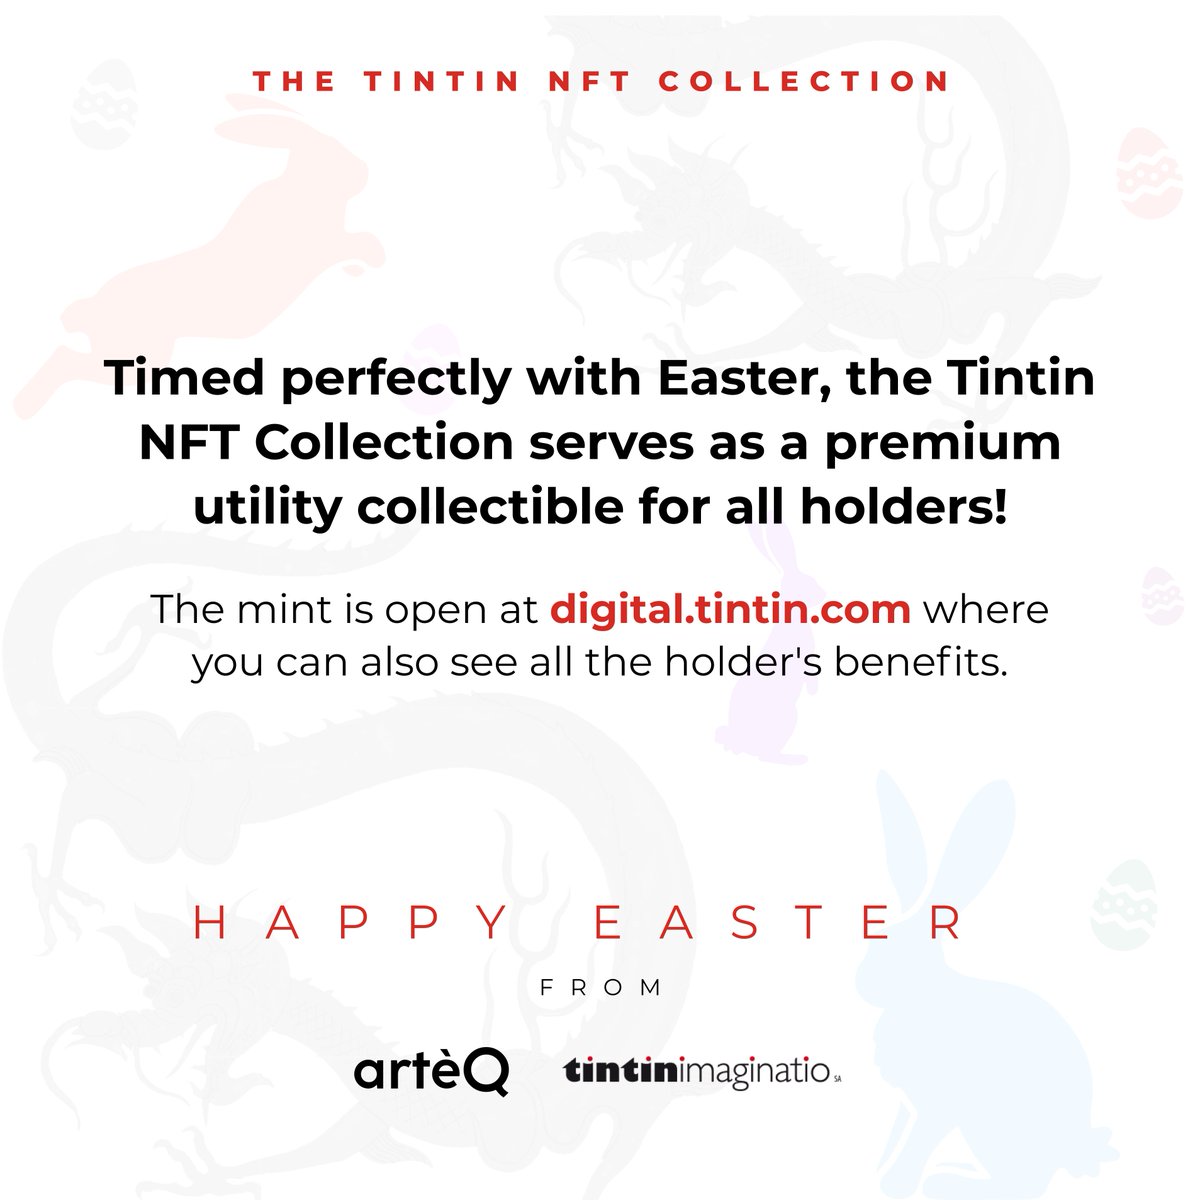 Happy Easter from Tintin & the artèQ team 🐣 🪺 @Tintin #arteQ #TintinNFT #HappyEaster